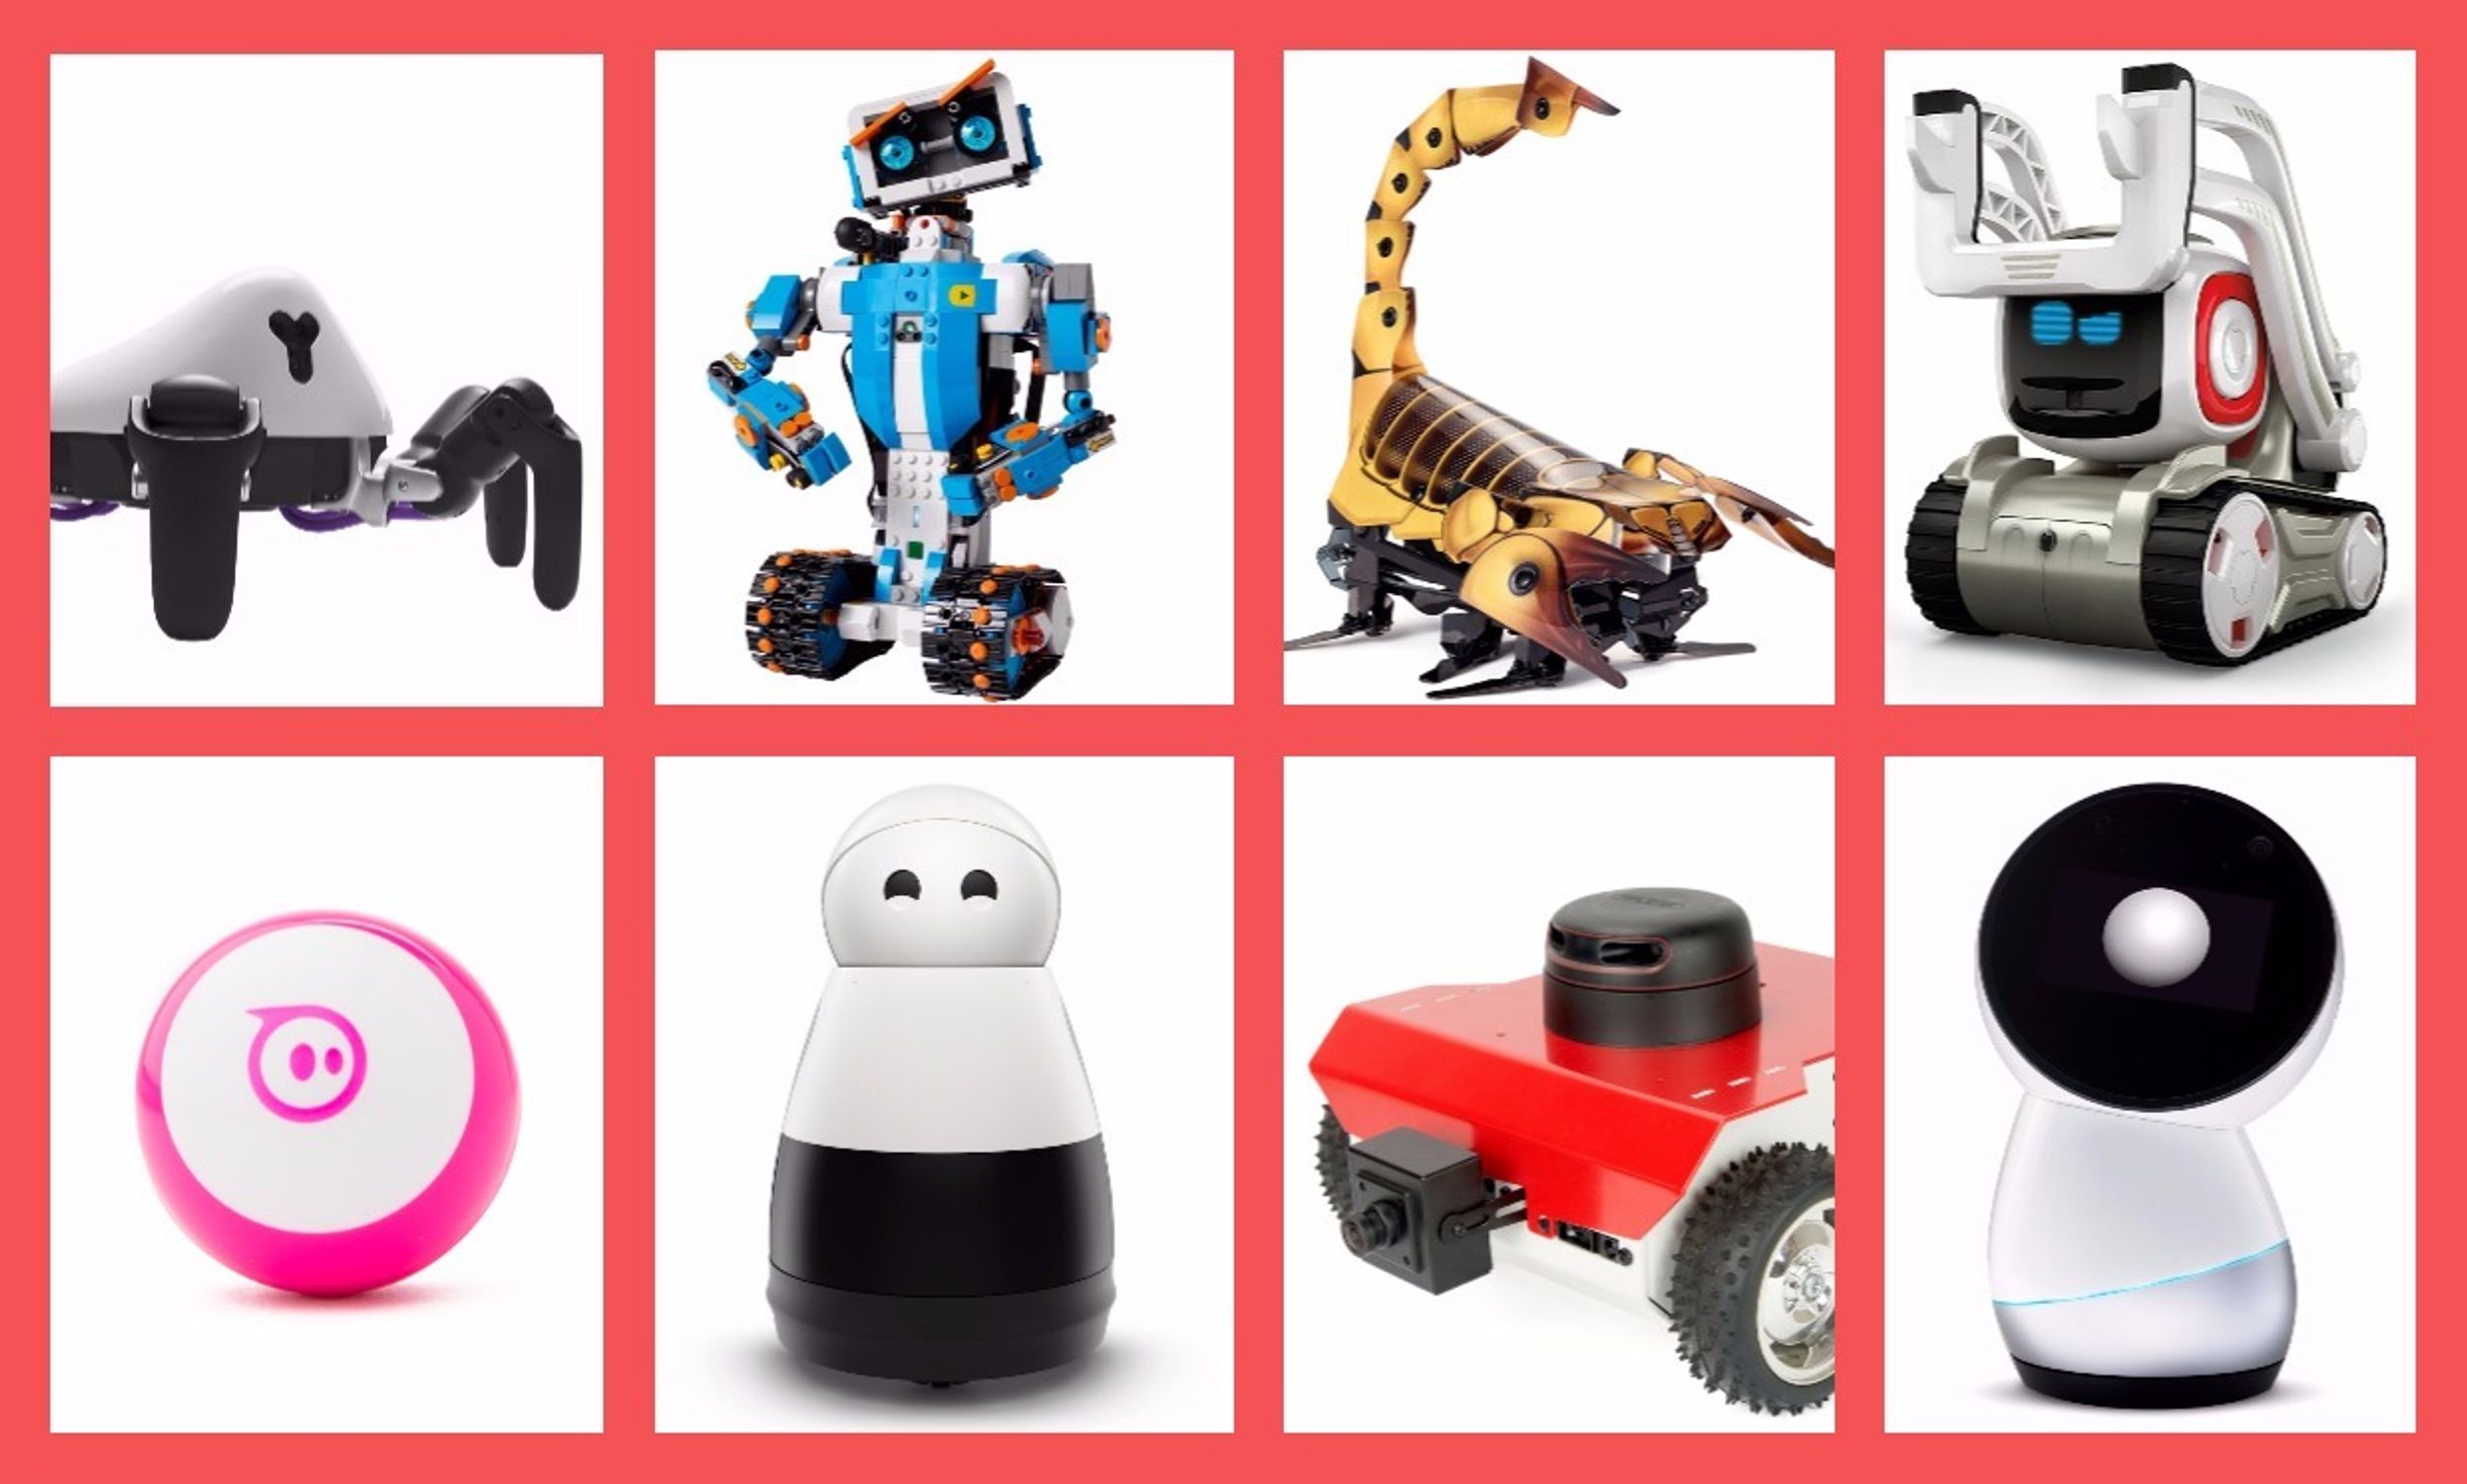 Robot gift ideas: Hexa spider robot; Lego Boost; Kamigami; Anki Cozmo; Mayfield's Kuri social robot; Husarion ROSbot; Jibo social robot